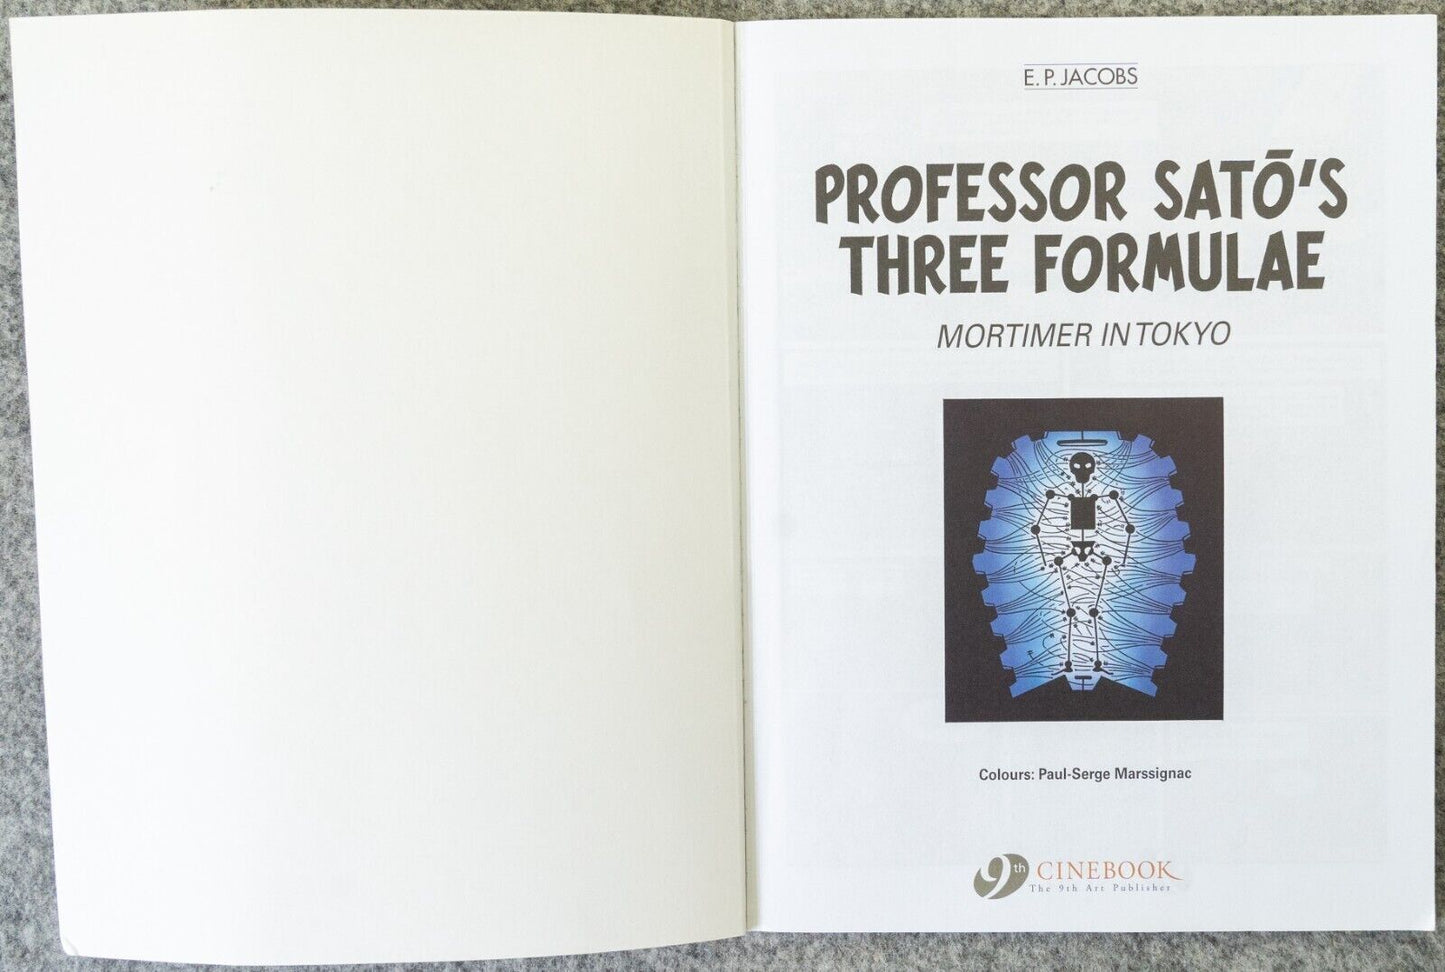 Professors Sato’s Three Formulae Part 1 - Blake & Mortimer Comic Volume 22 - Cinebook UK Paperback Edition